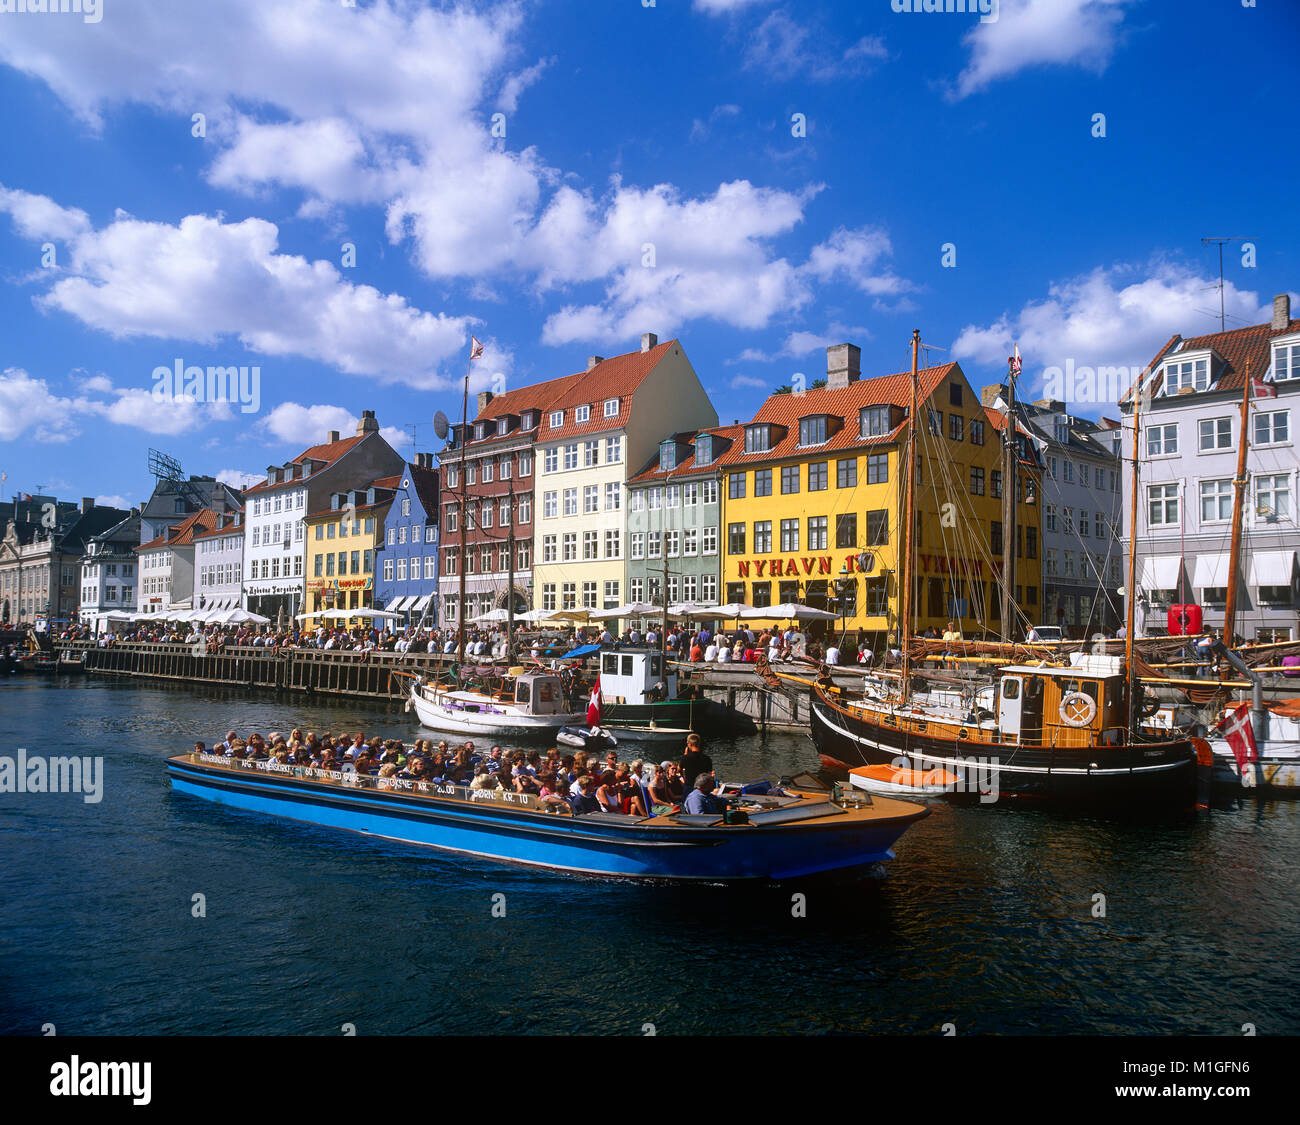 Tourists on pleasure boat, Nyhavn, Copenhagen, Denmark. Stock Photo